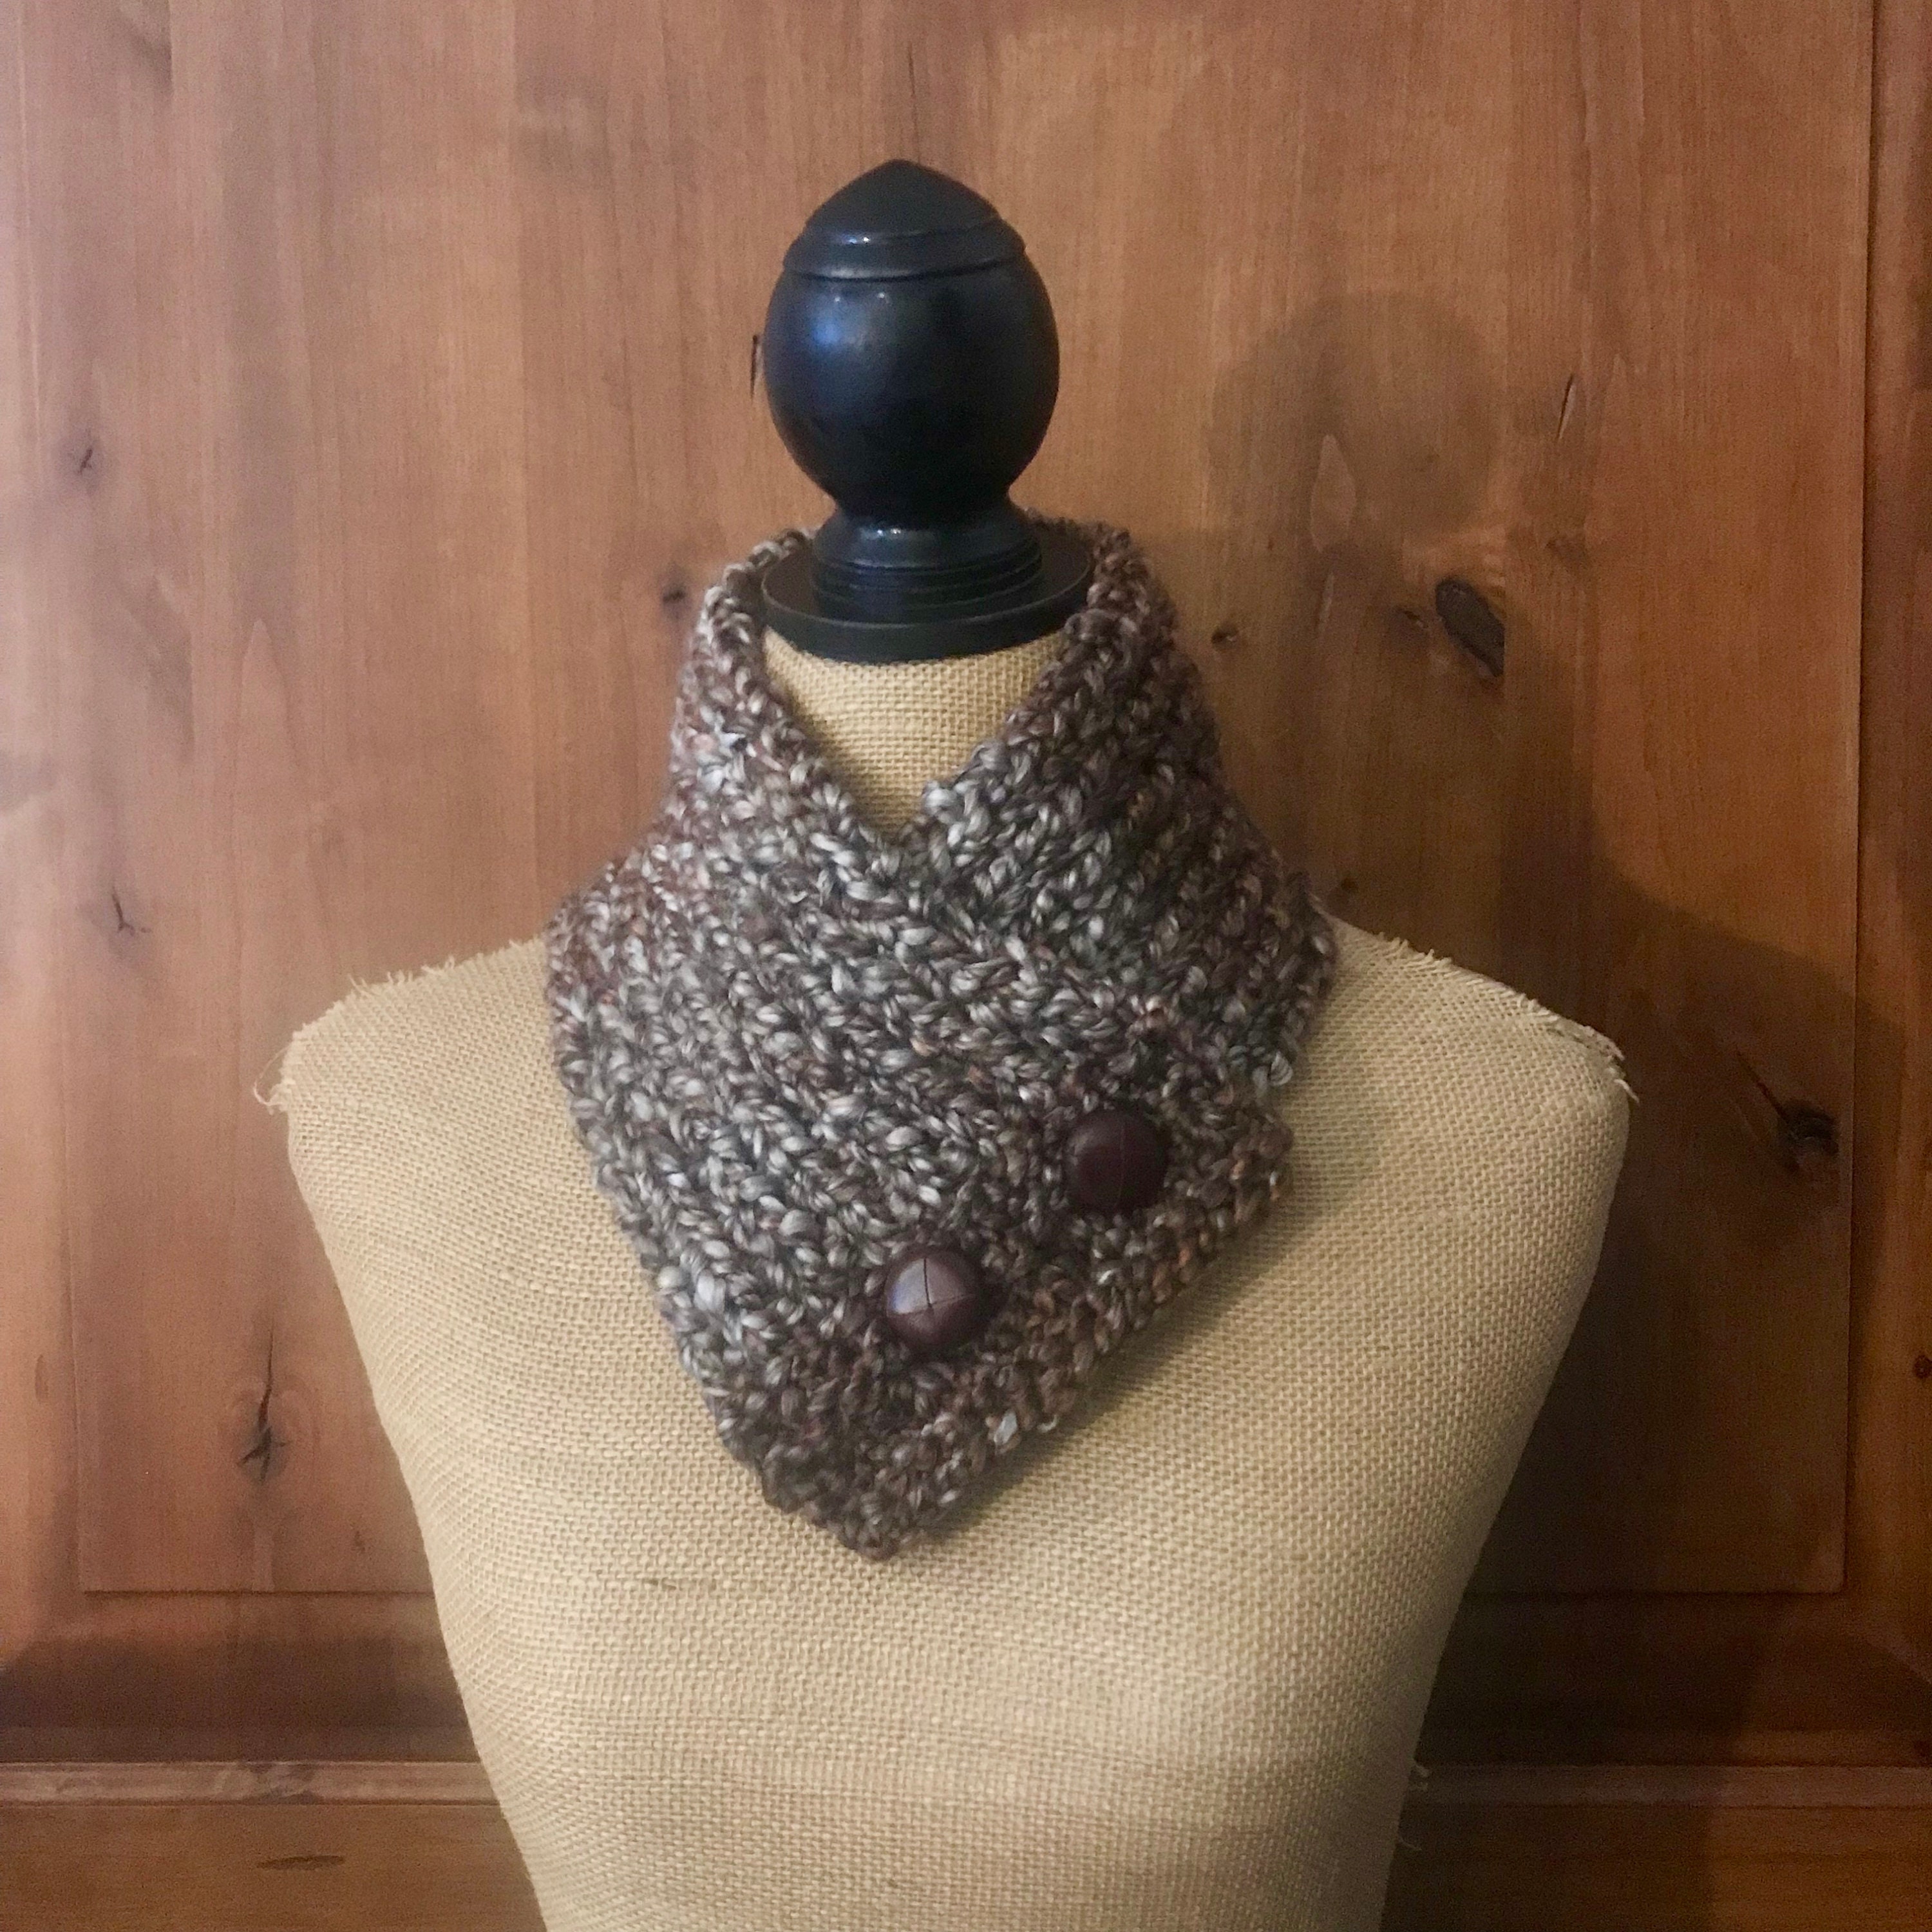 Knitting Loom Kit Super Chunky Hat and Asymmetrical Cowl Knitting